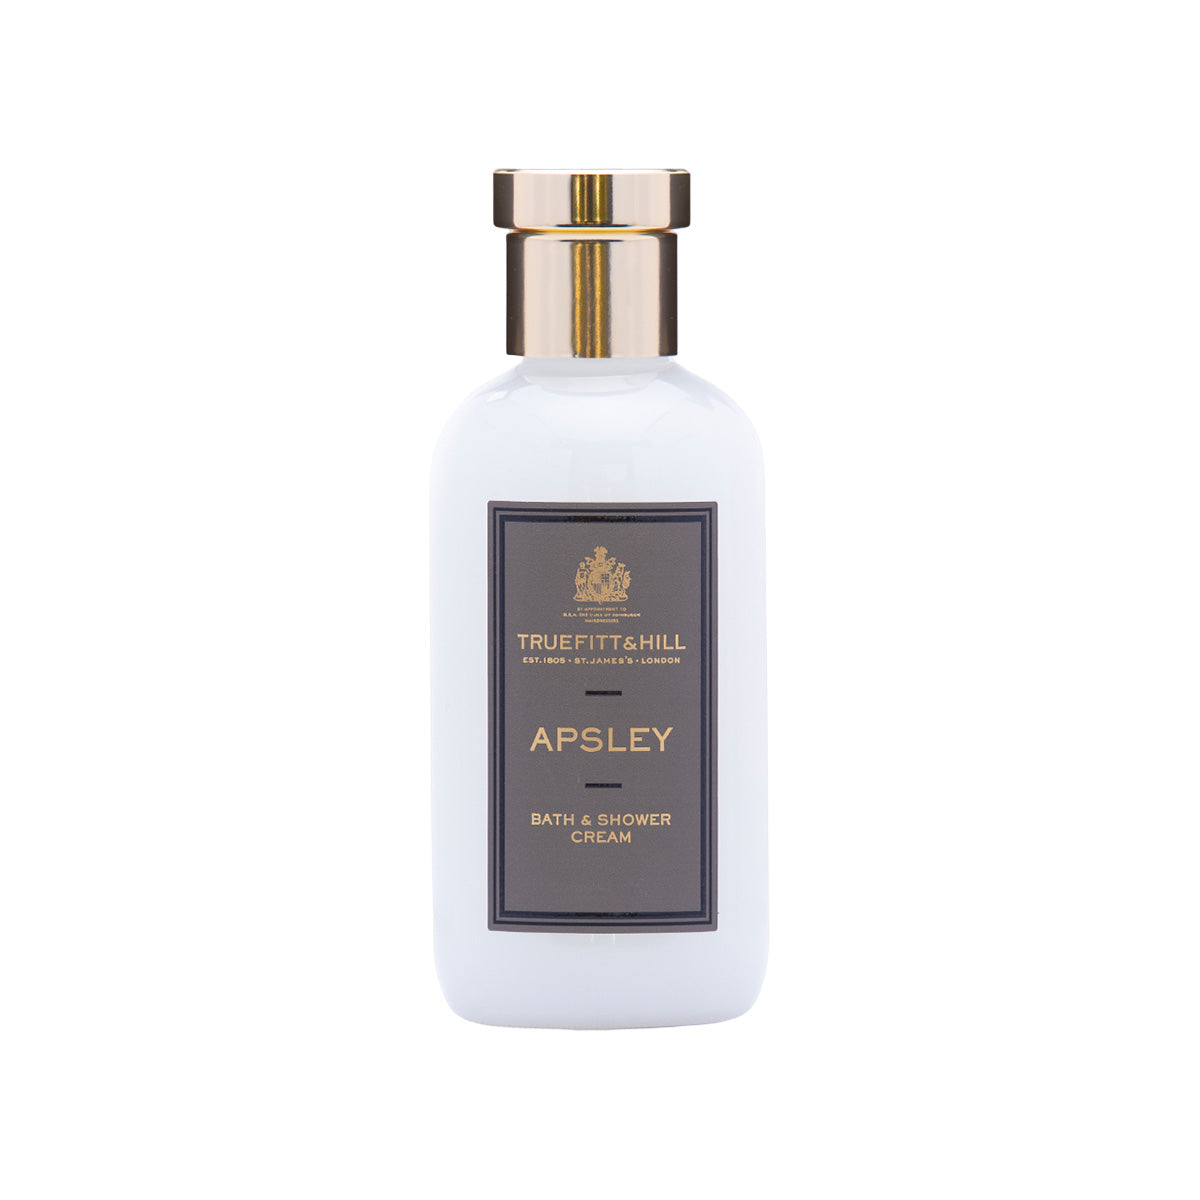 Apsley Bath & Shower Cream